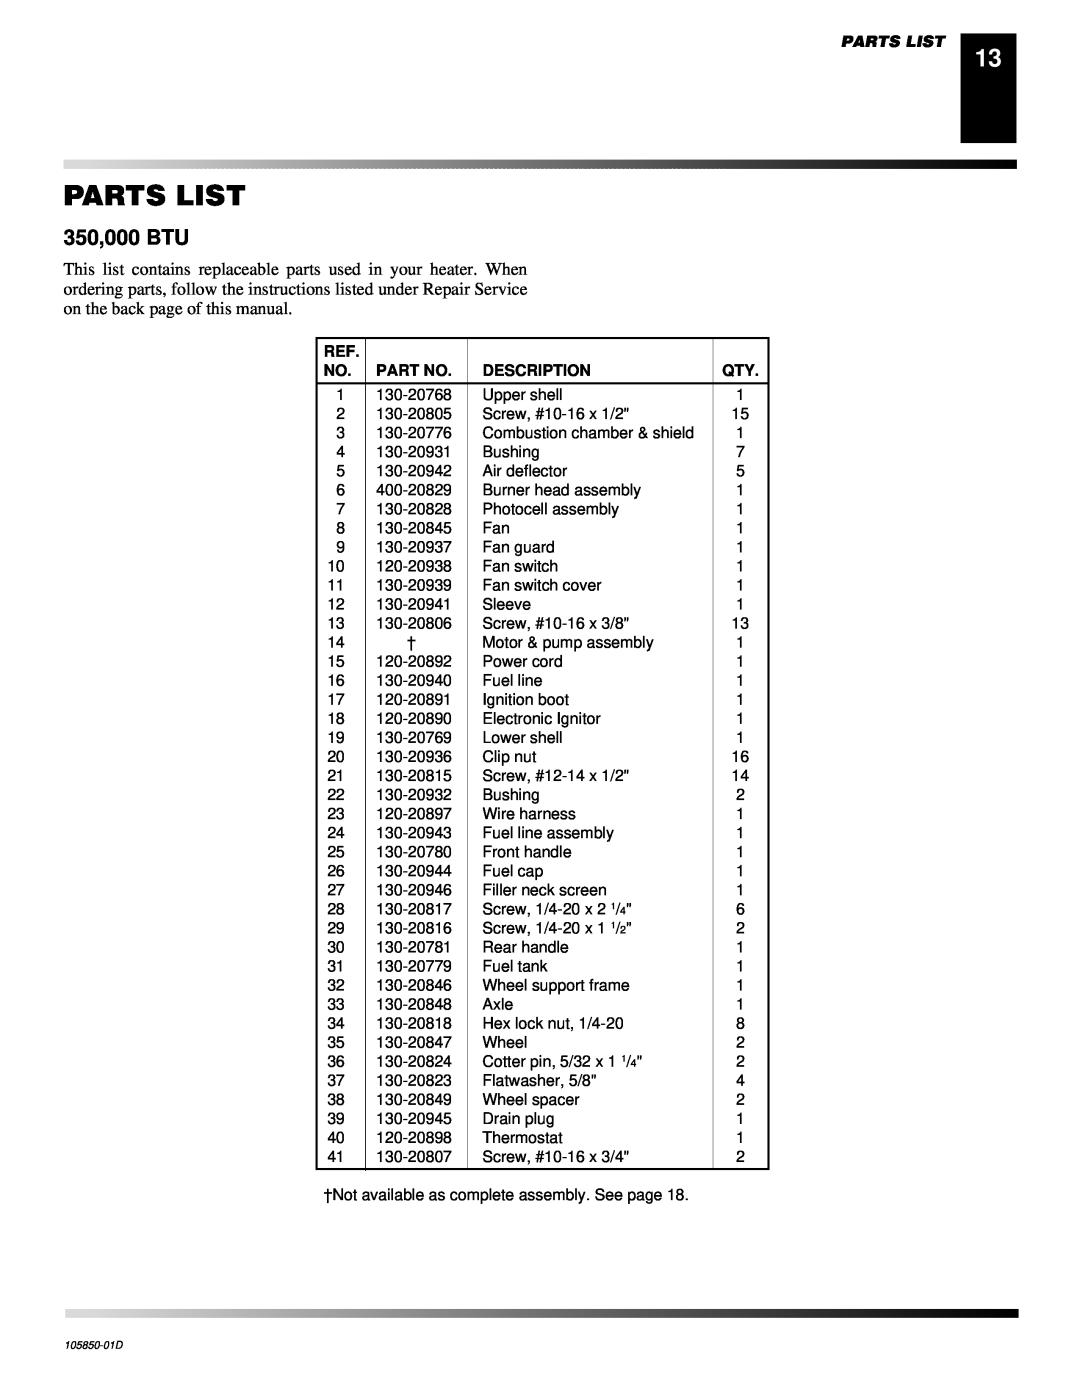 Desa CP350AK, CP600AK owner manual Parts List, 350,000 BTU, Description 